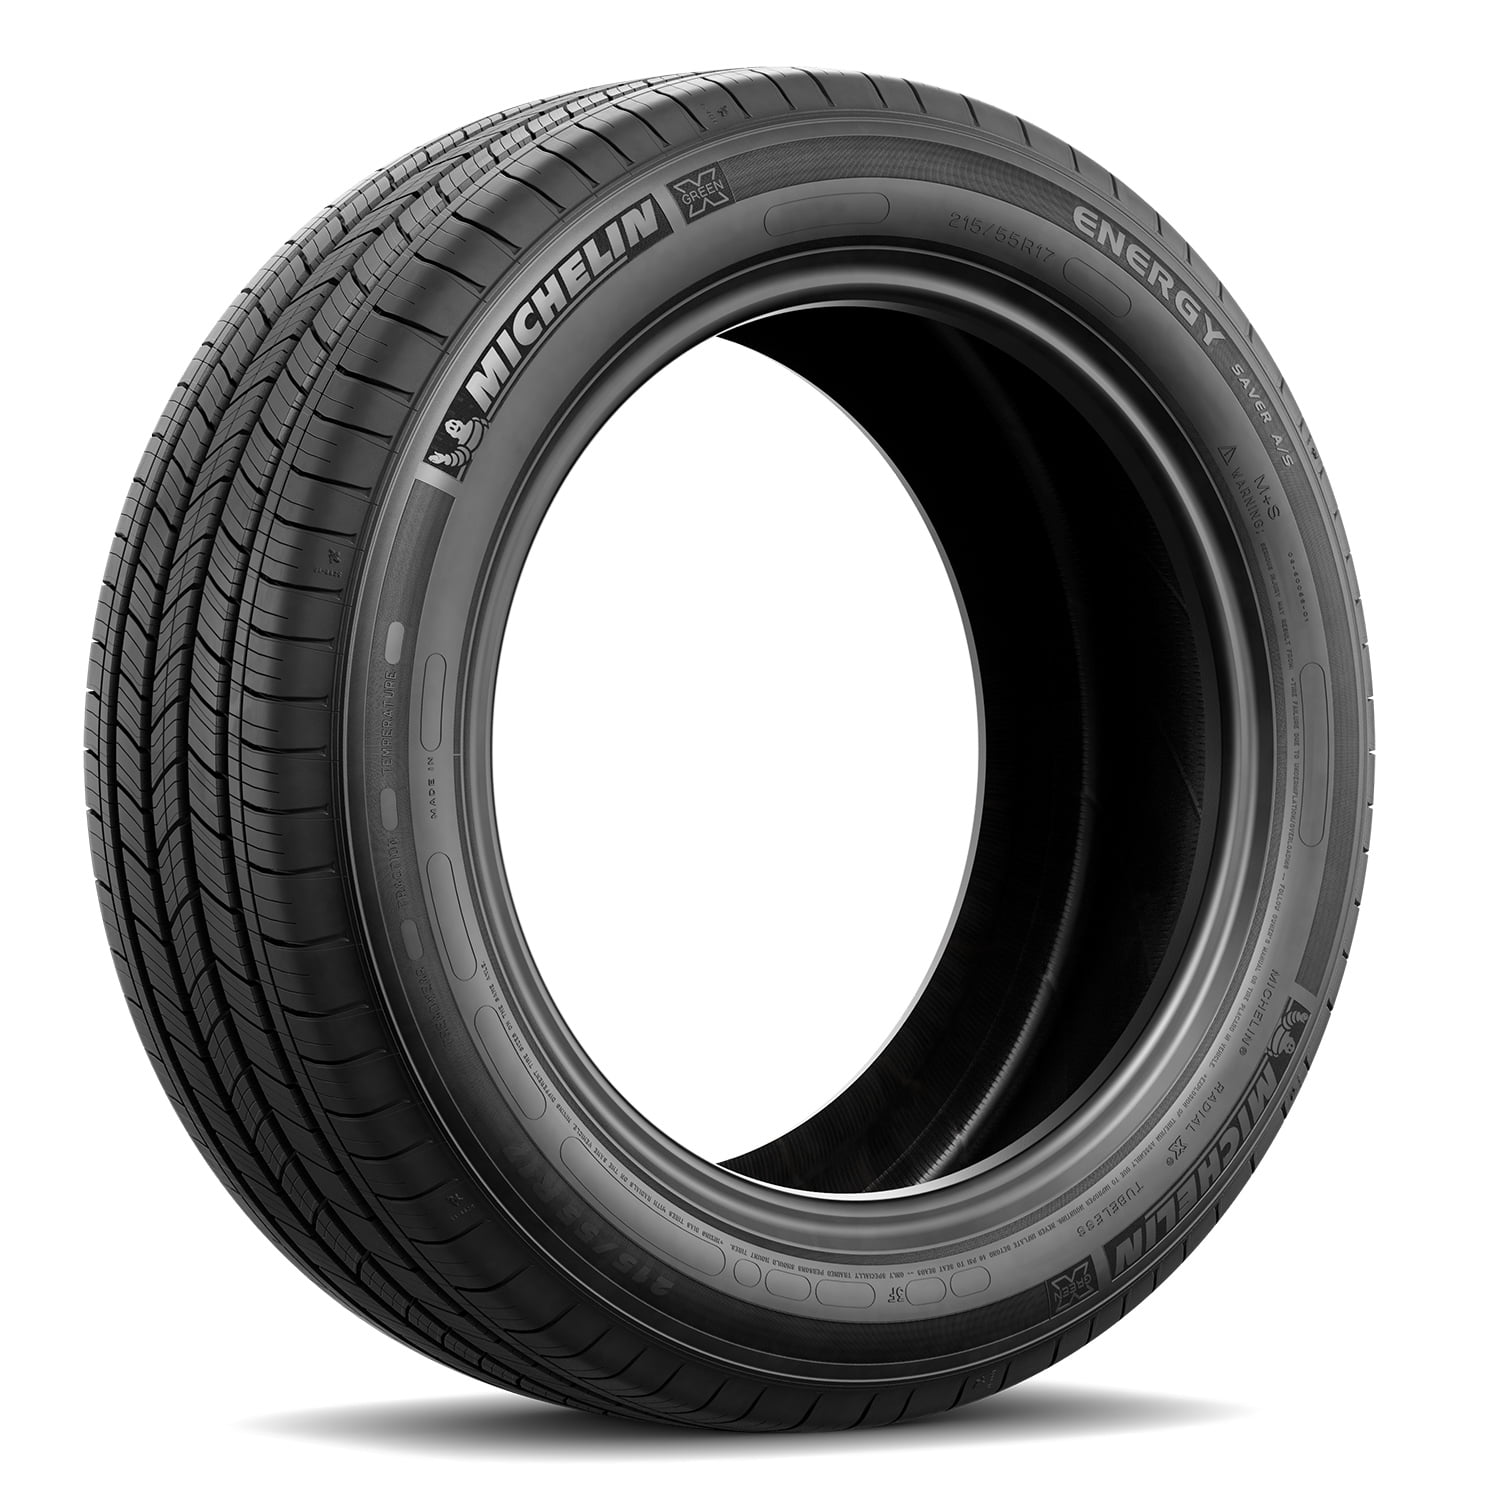 Michelin Energy Saver A/S All Season 215/55R17 94V Passenger Tire